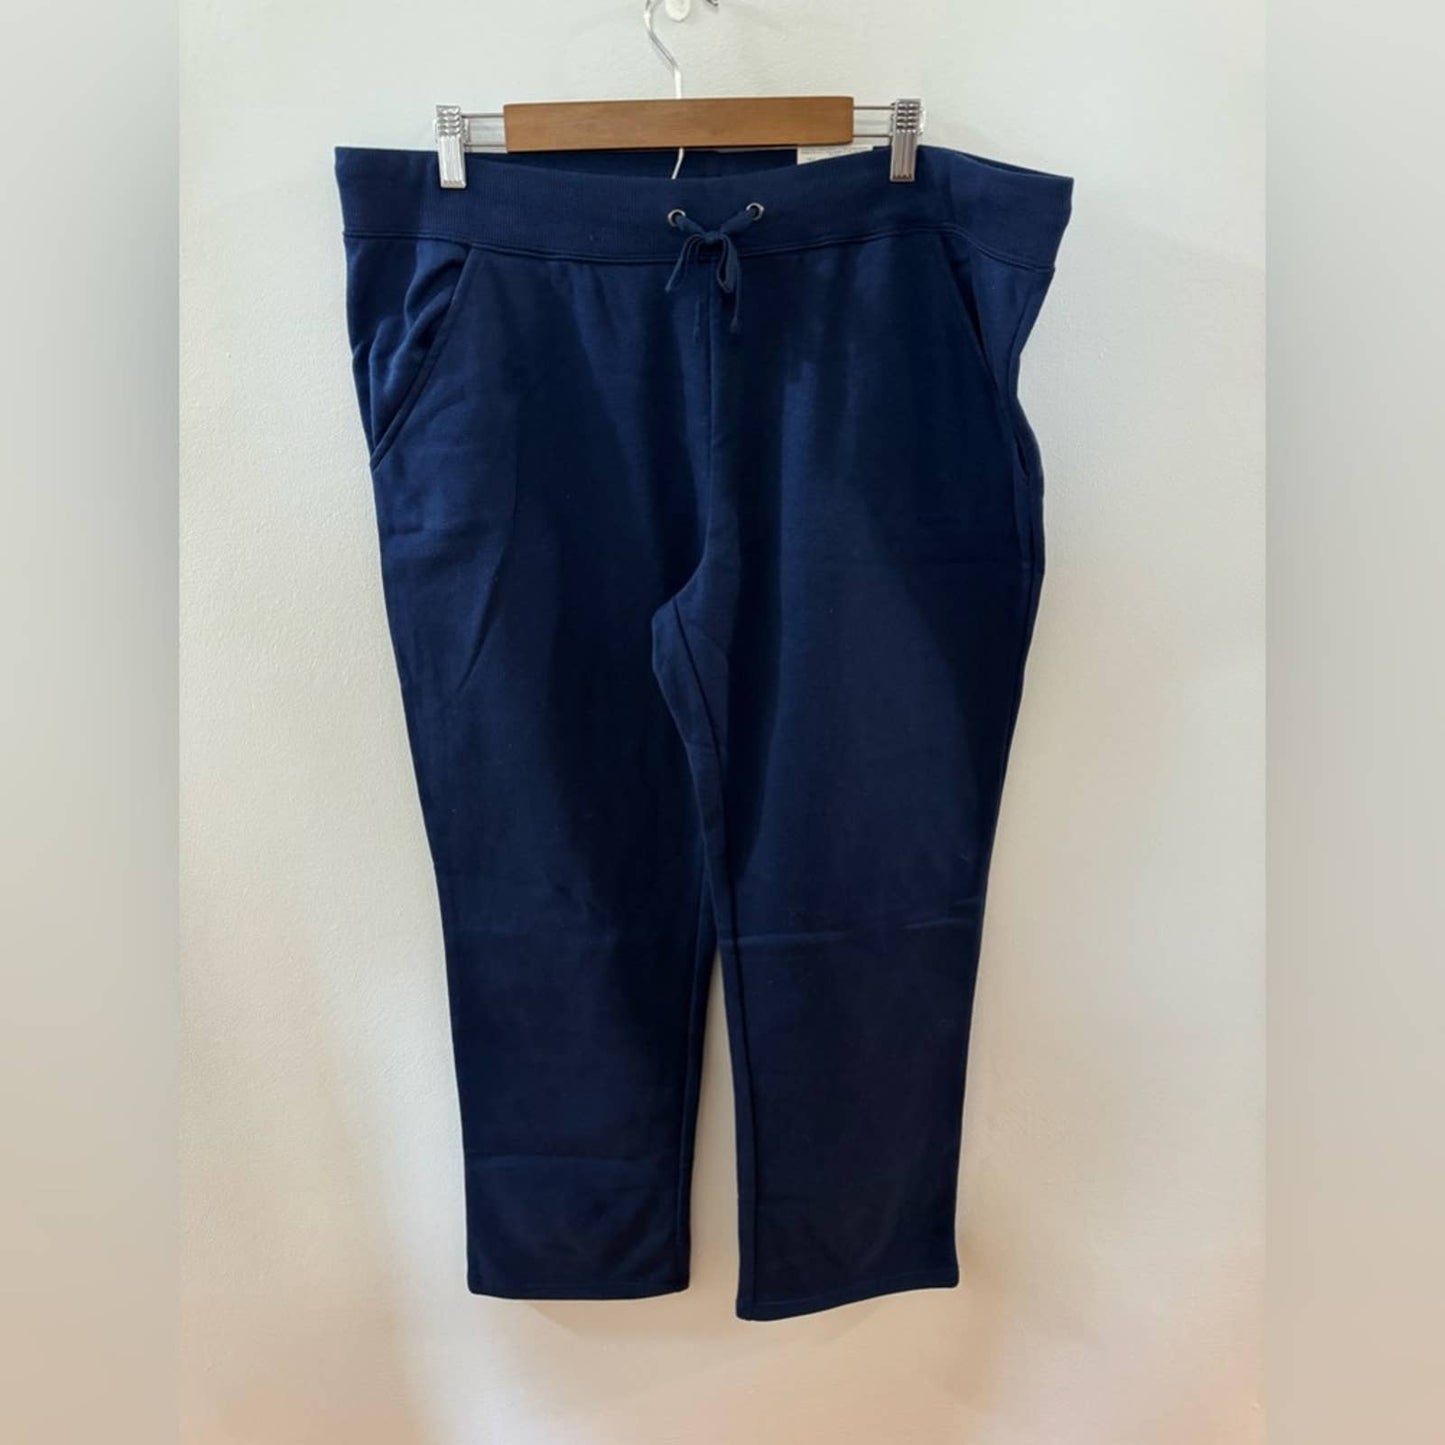 NWT XL St John’s Bay Mid-Rise Straight Navy Pants